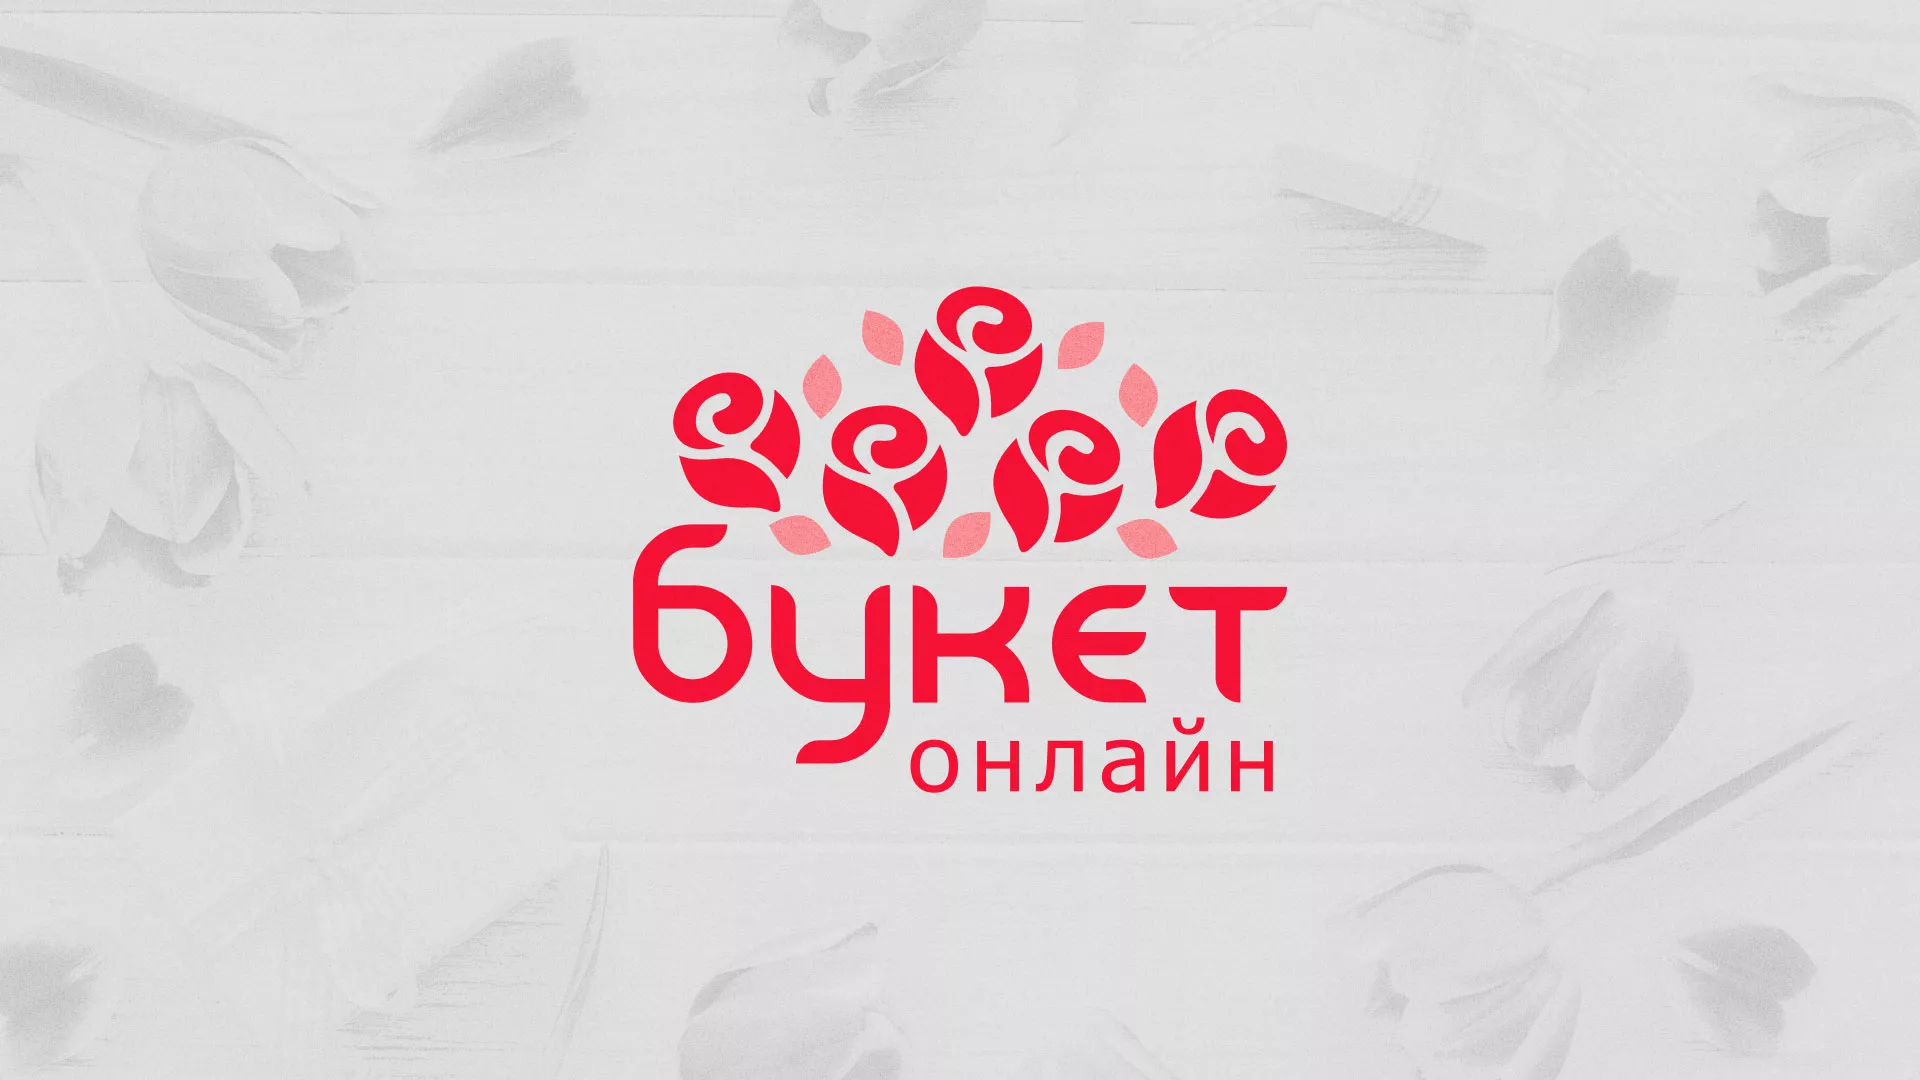 Создание интернет-магазина «Букет-онлайн» по цветам в Лукоянове